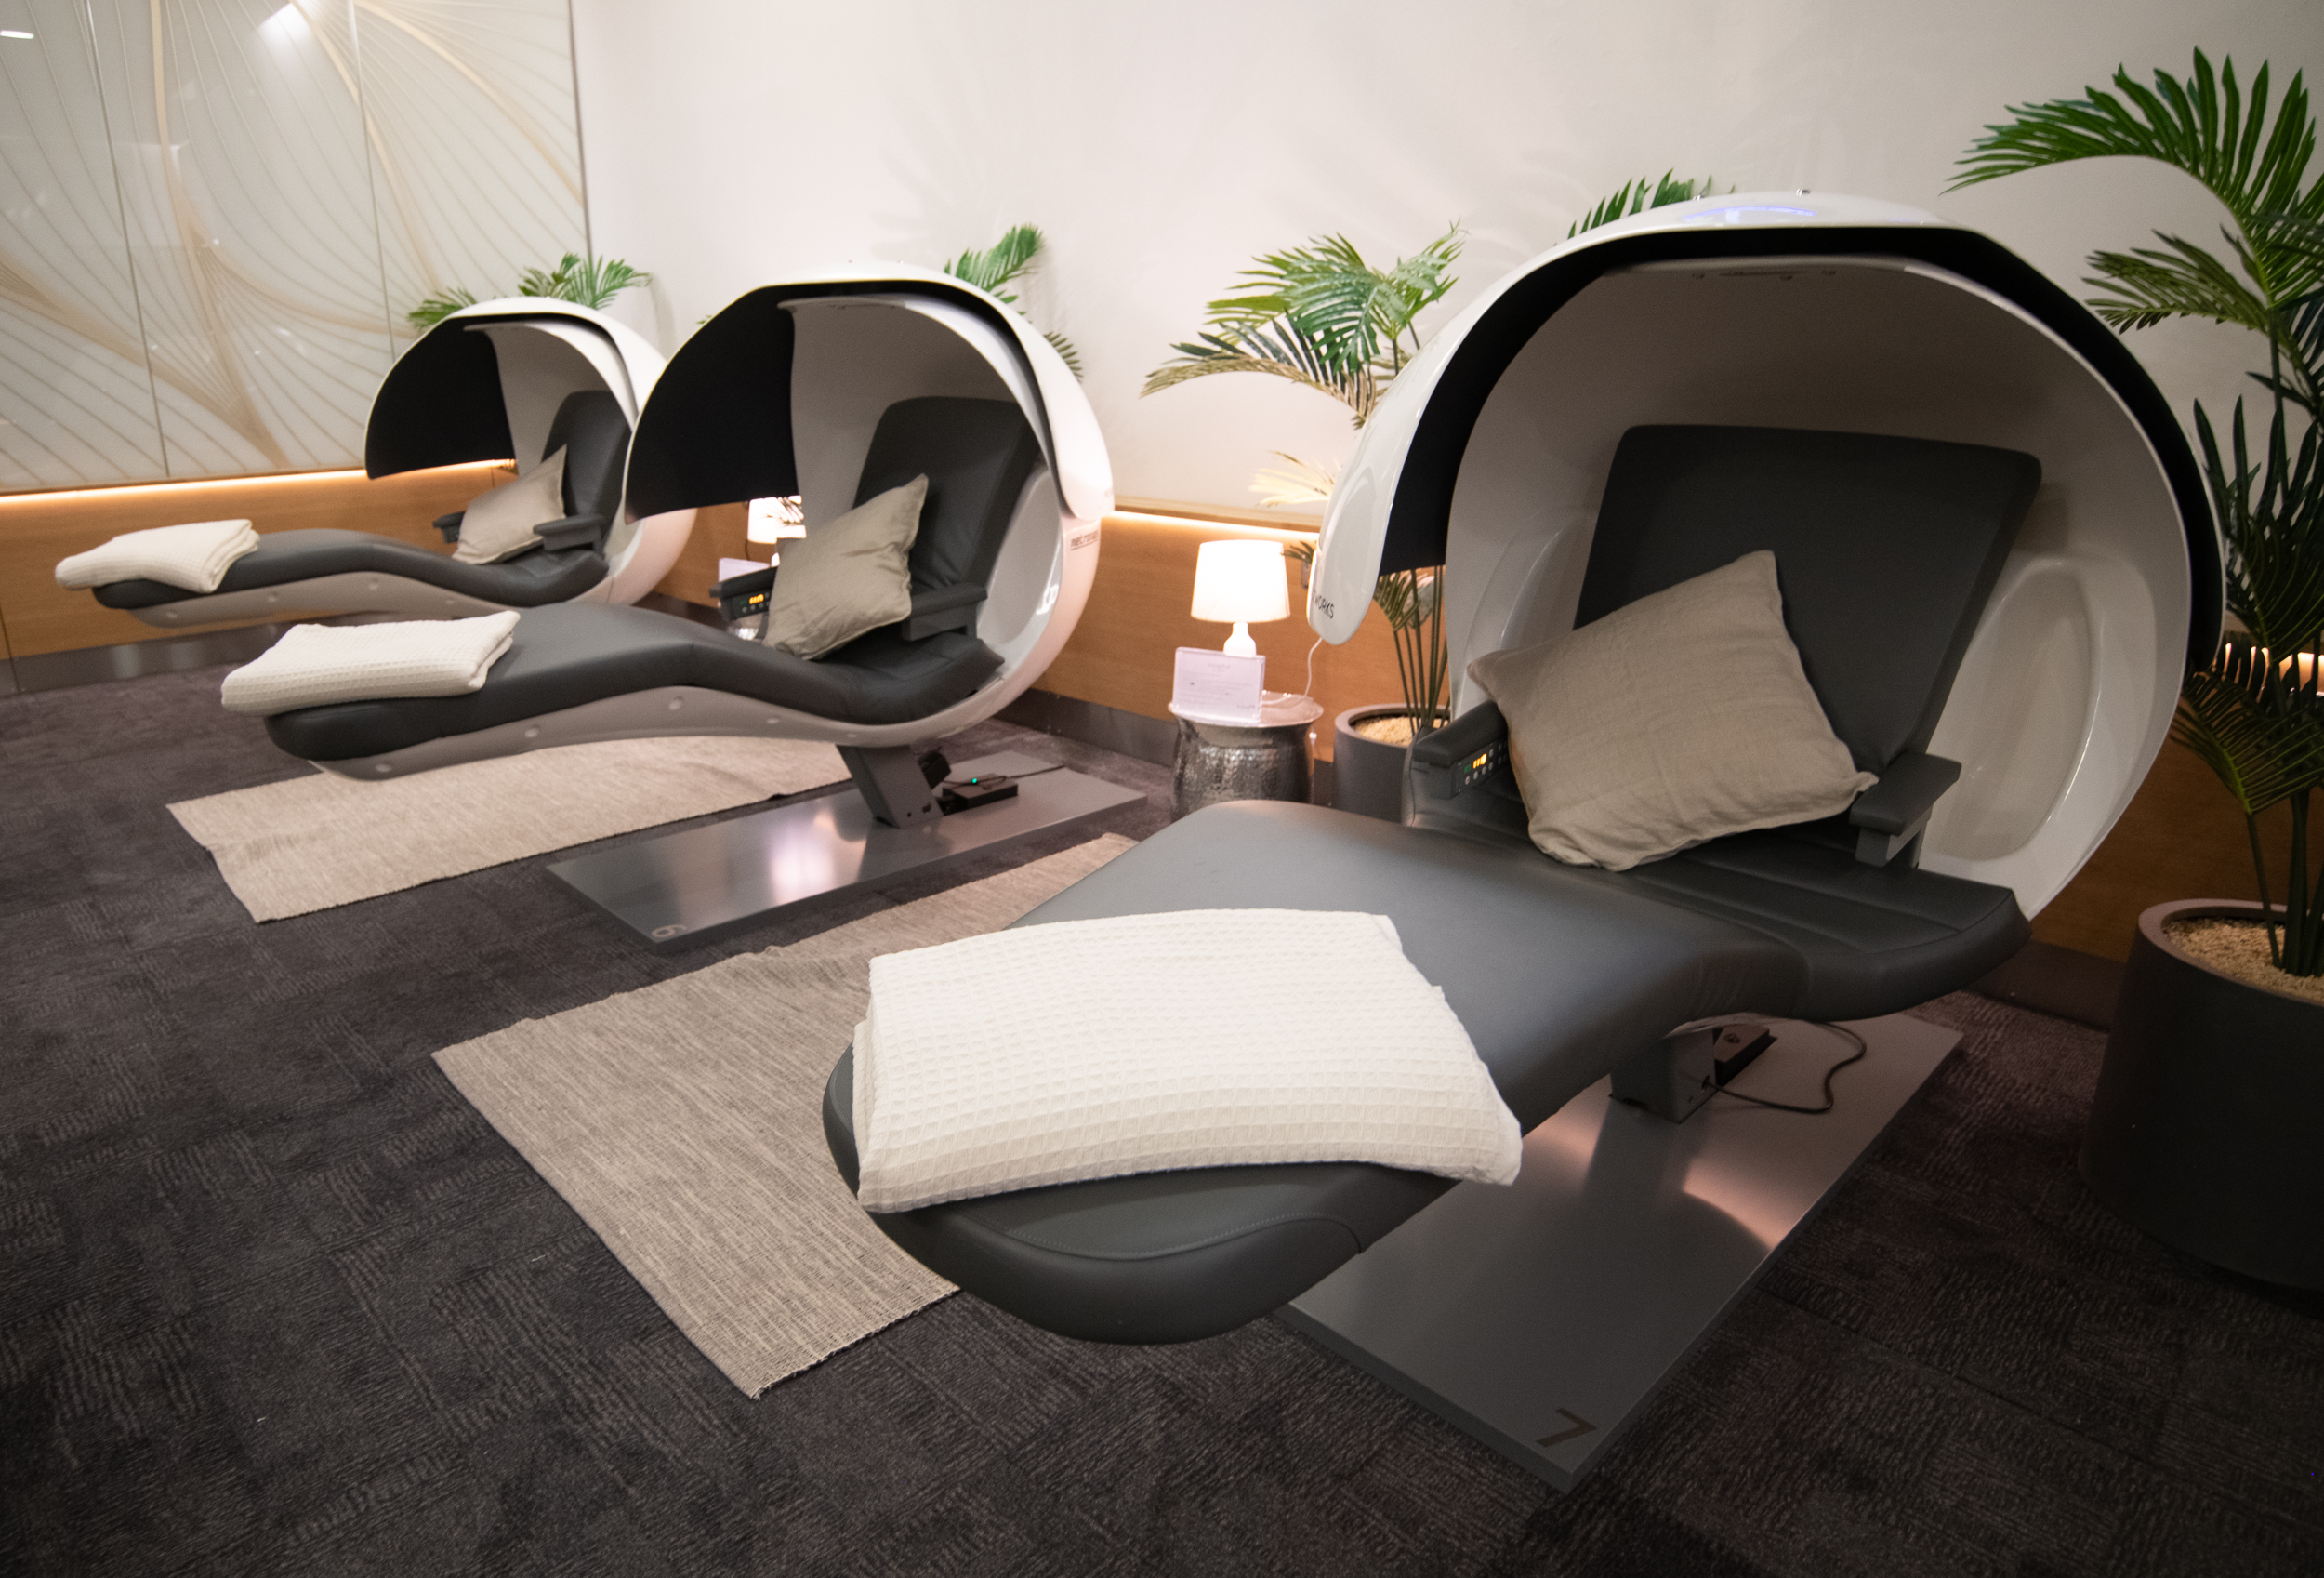 New Sleep Pods unveiled by British Airways at Heathrow Airport, image by Globetrender